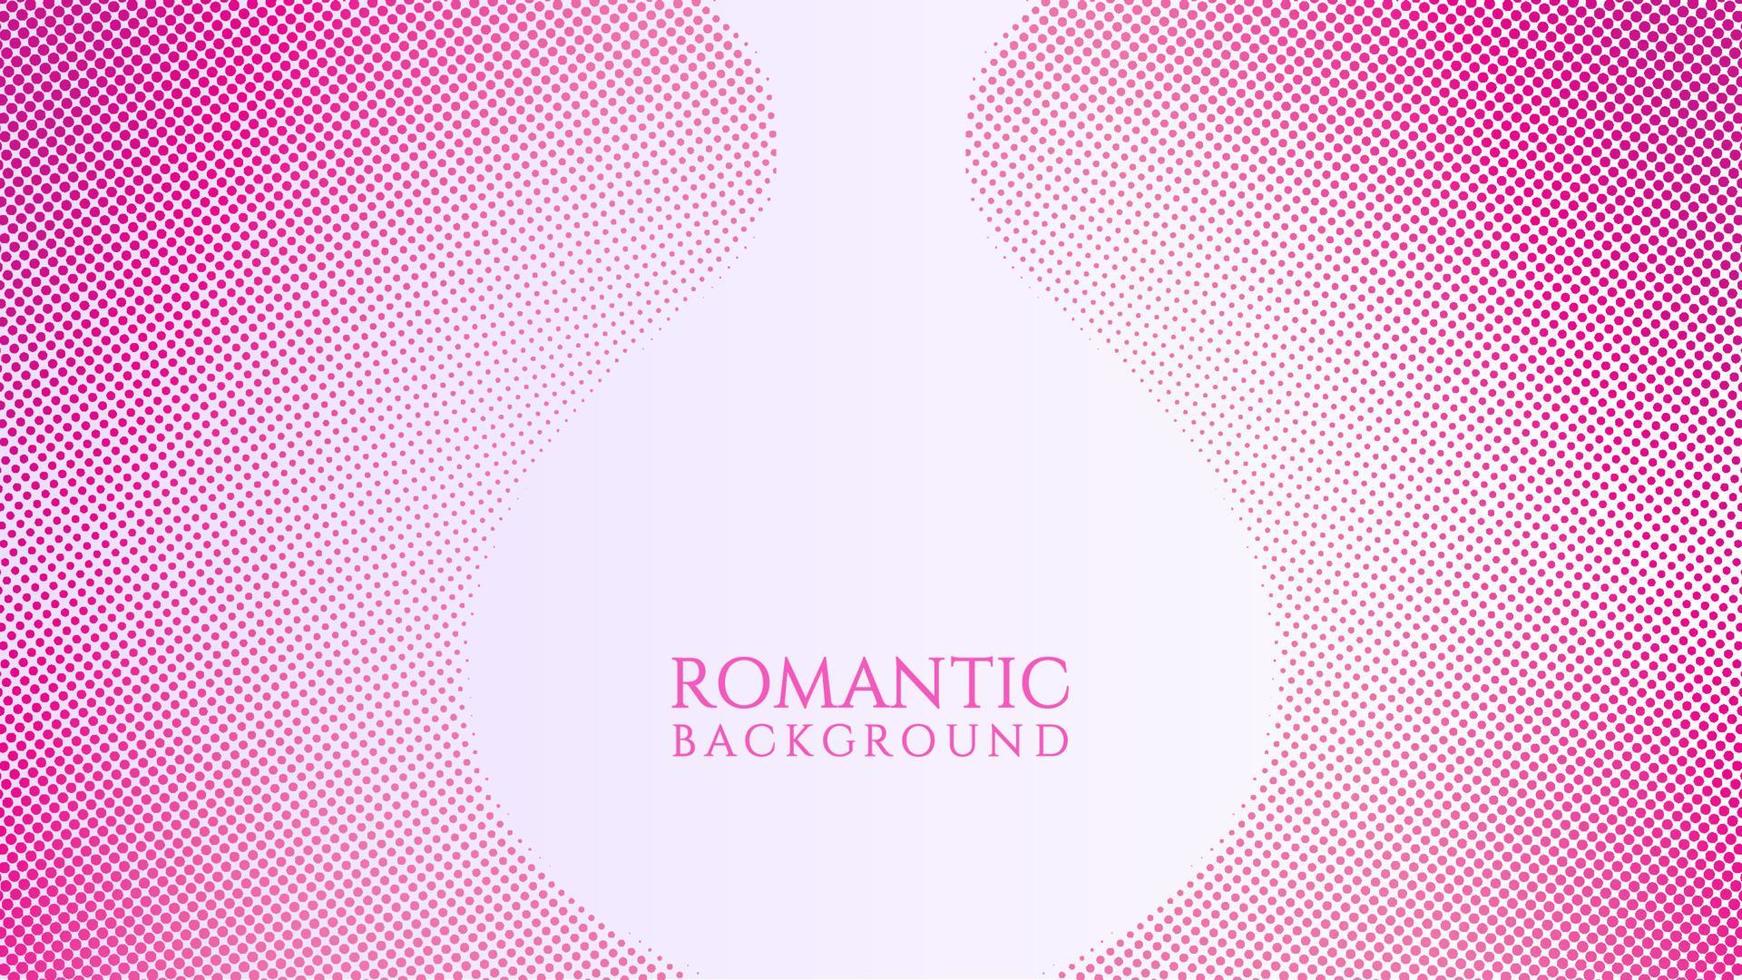 Halftone Background Design Template, Pop Art, Abstract Dots Pattern Illustration, Retro Texture Element, Pink Violet Gradient, Romantic Color, Valentine Day vector